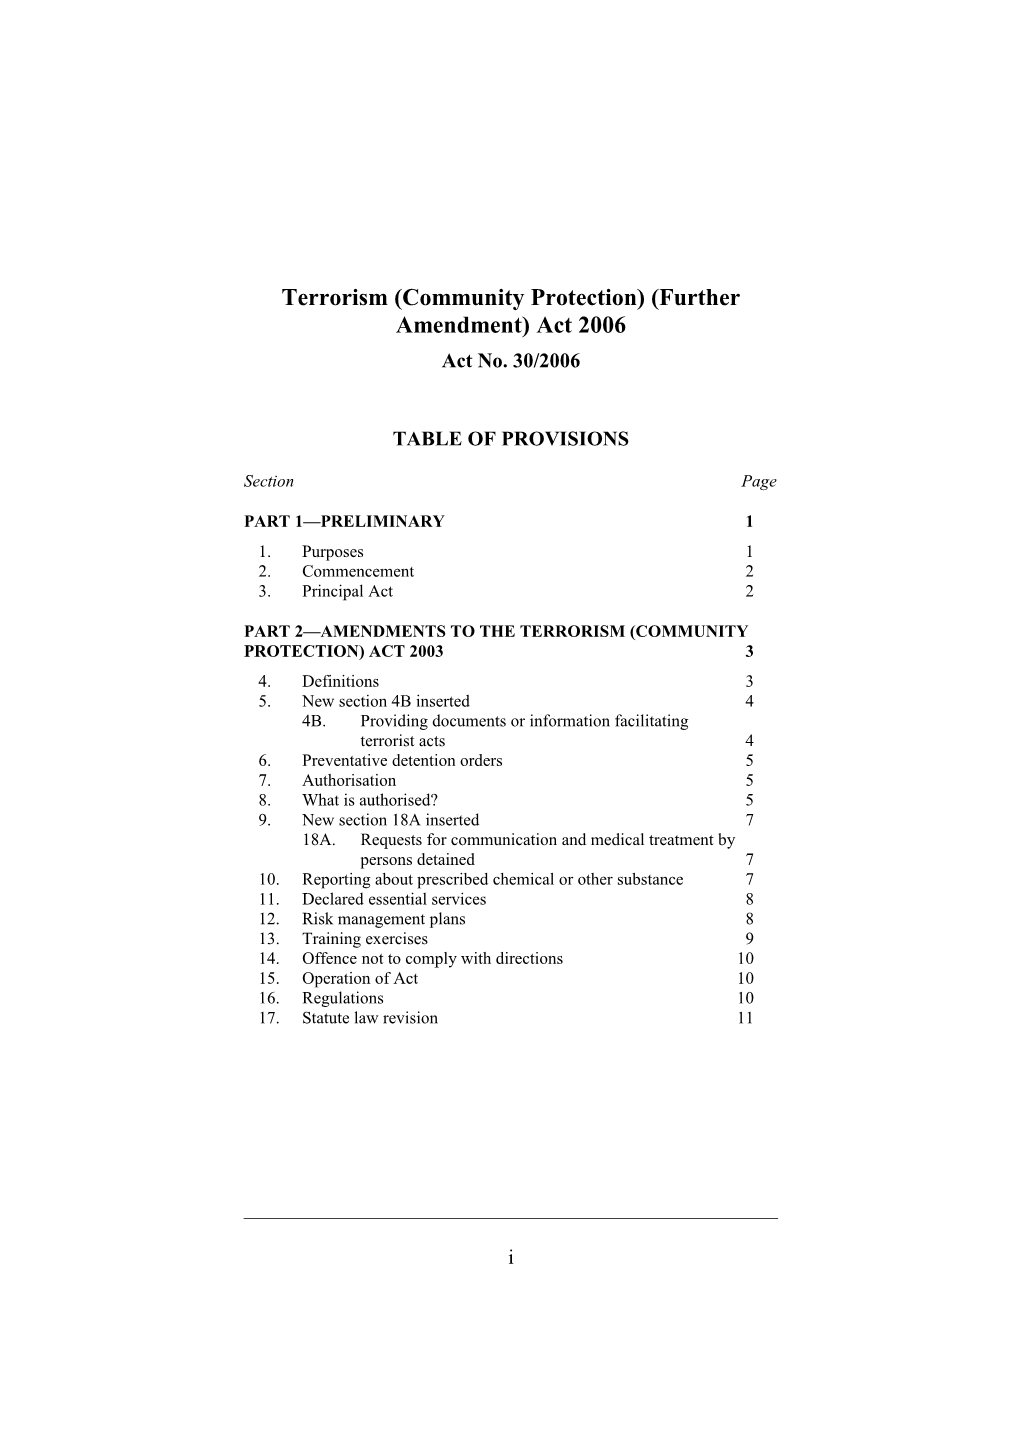 Terrorism (Community Protection) (Further Amendment) Act 2006